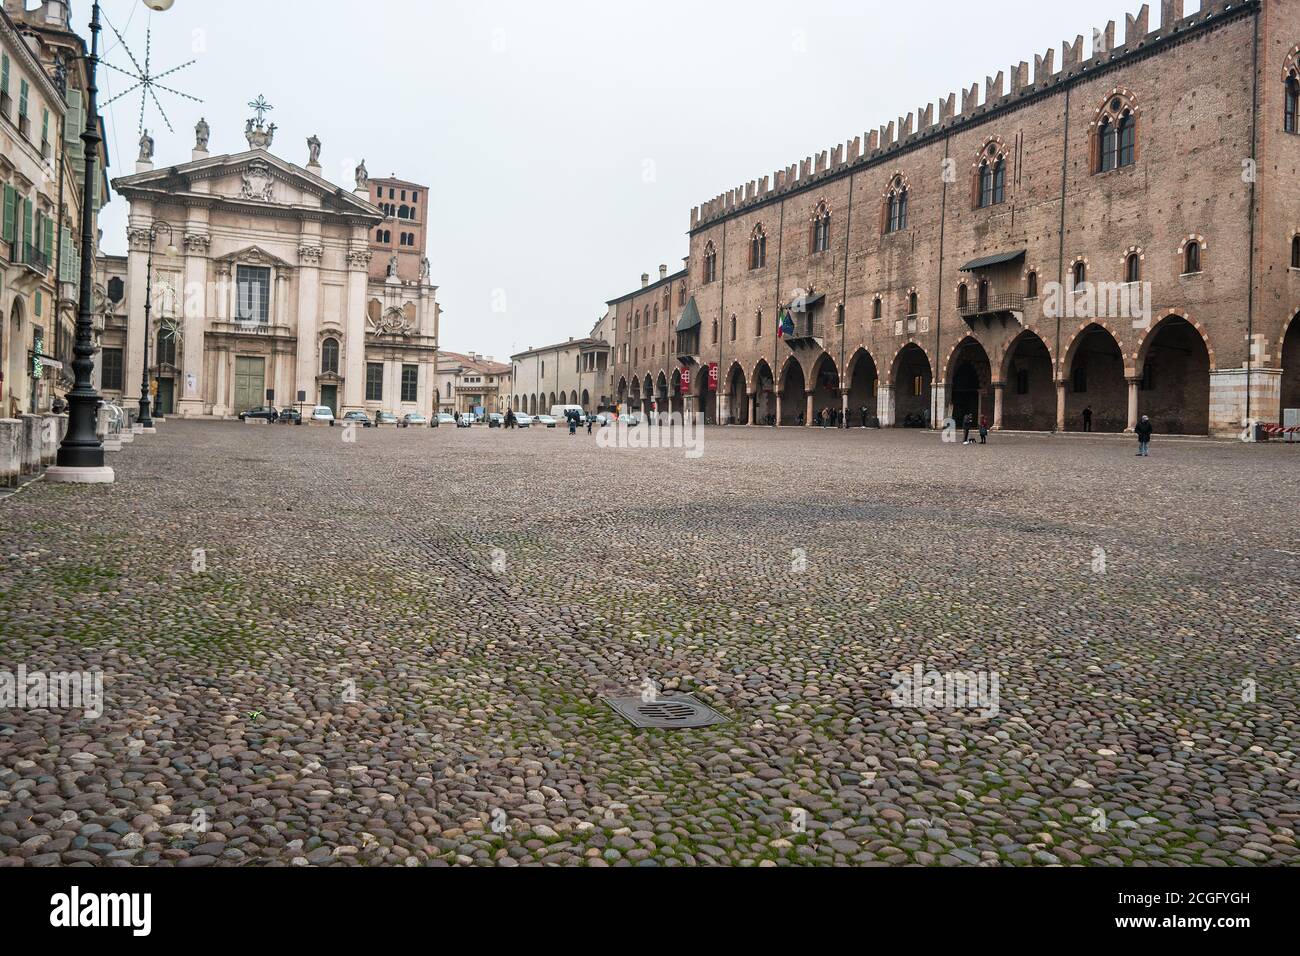 Der berühmte Platz Piazza Sordello und die Kathedrale San Pietro apostolo in Mantua, Lombardei, Italien. Stockfoto